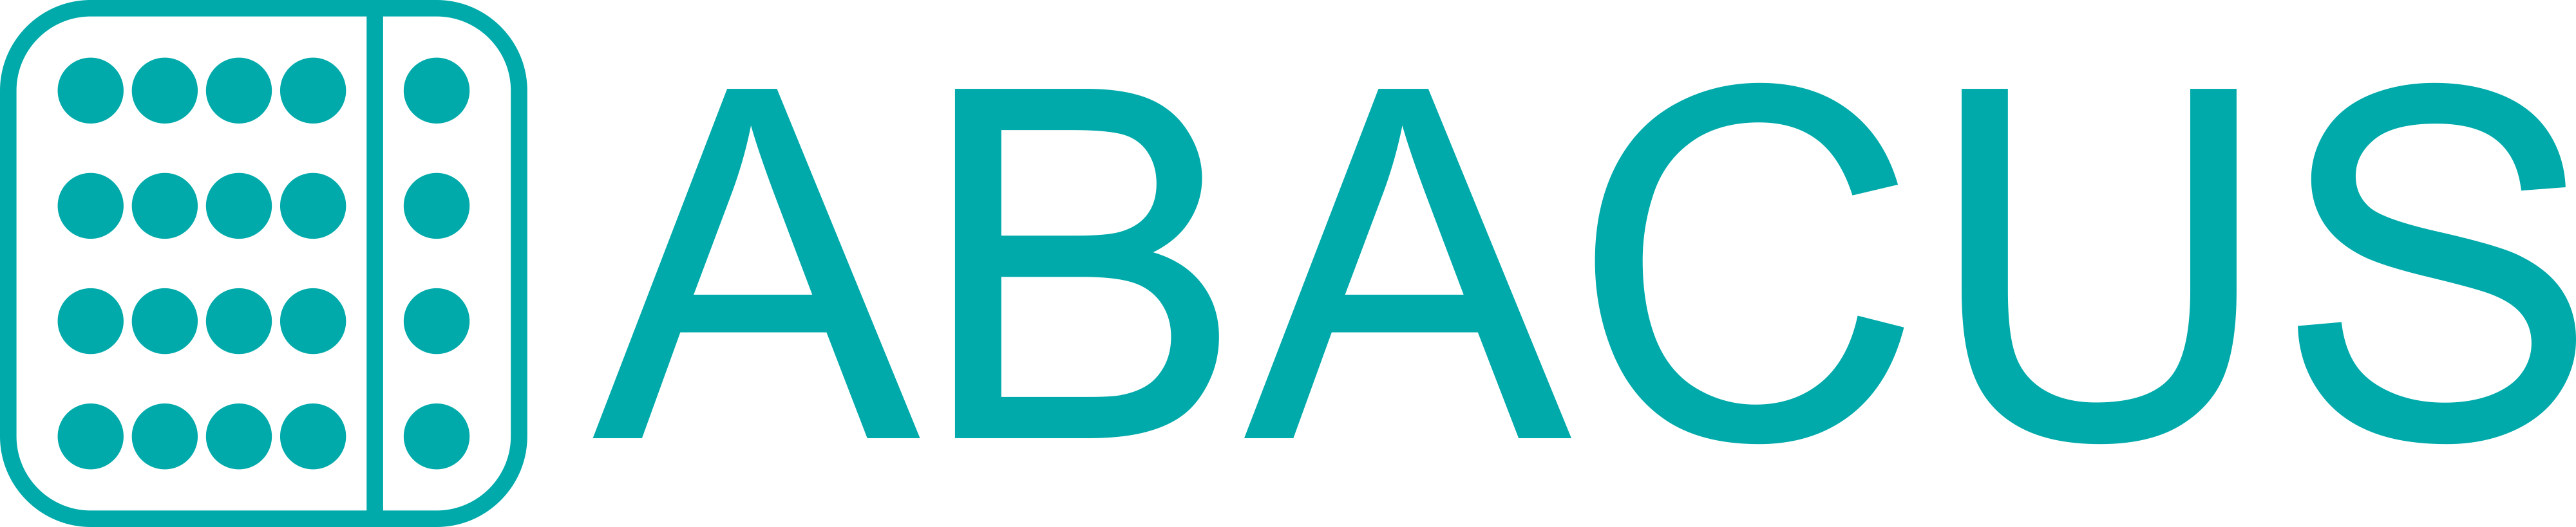 Unternehmertreffen Nordwest Logo ABACUS electronics